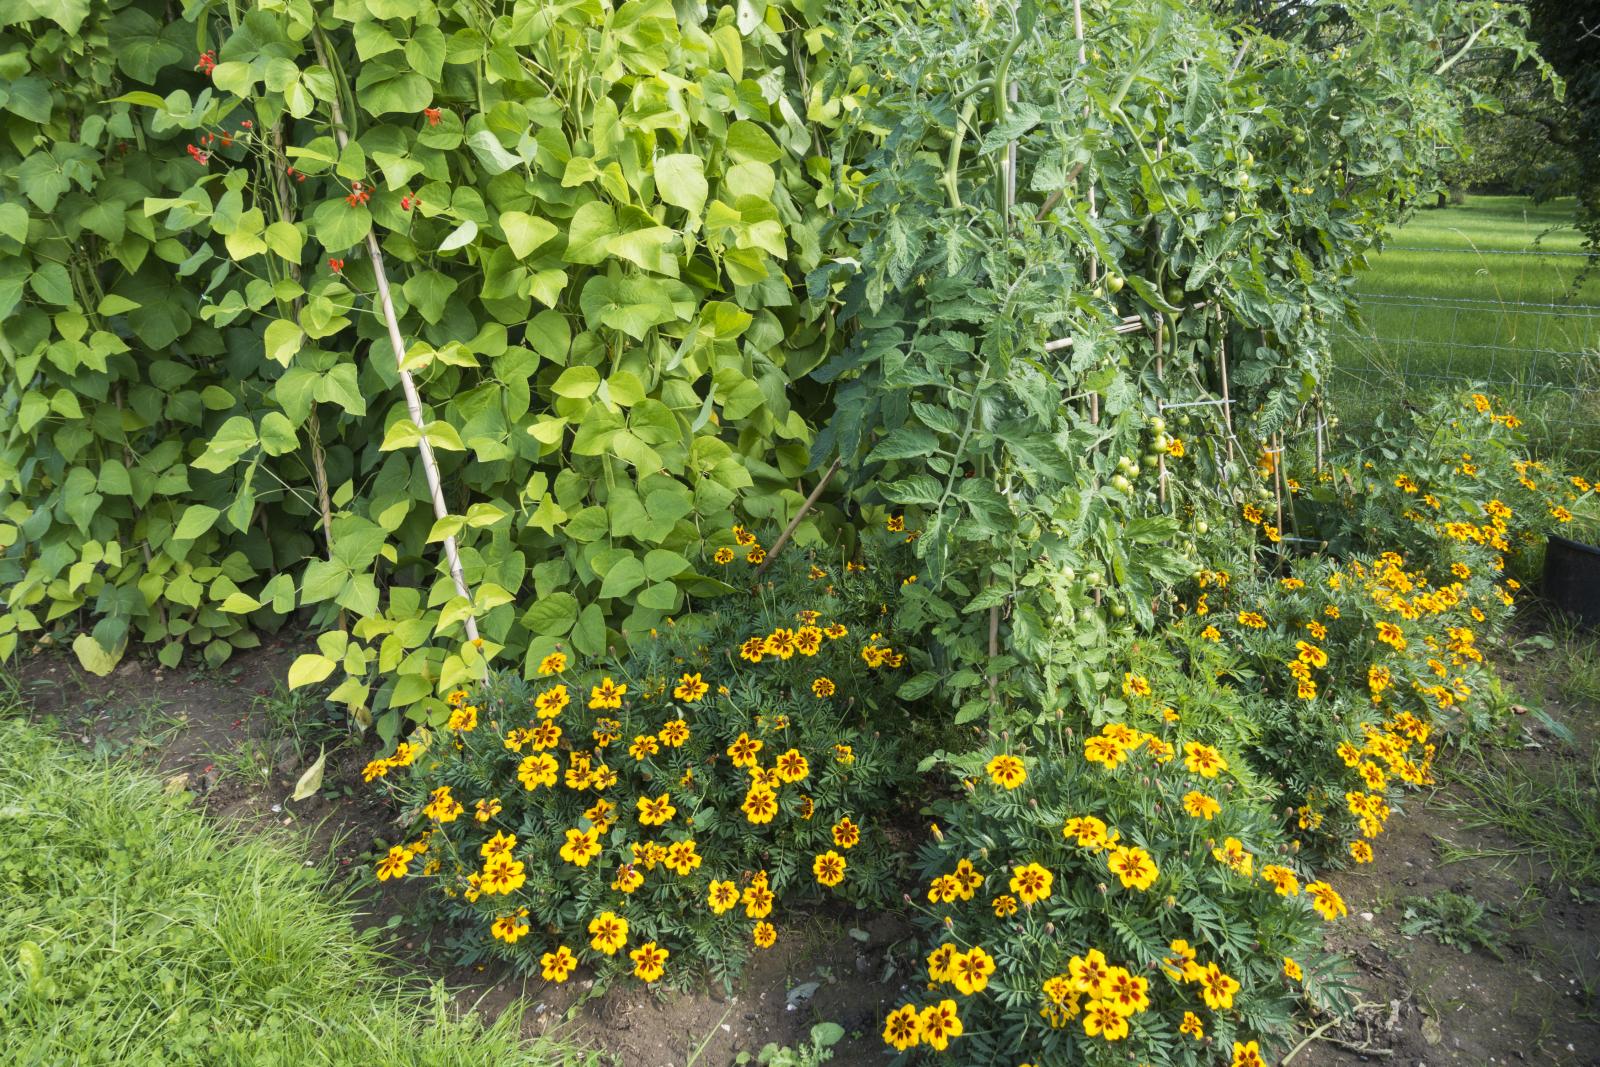 Edible Companion Plants to Grow This Summer